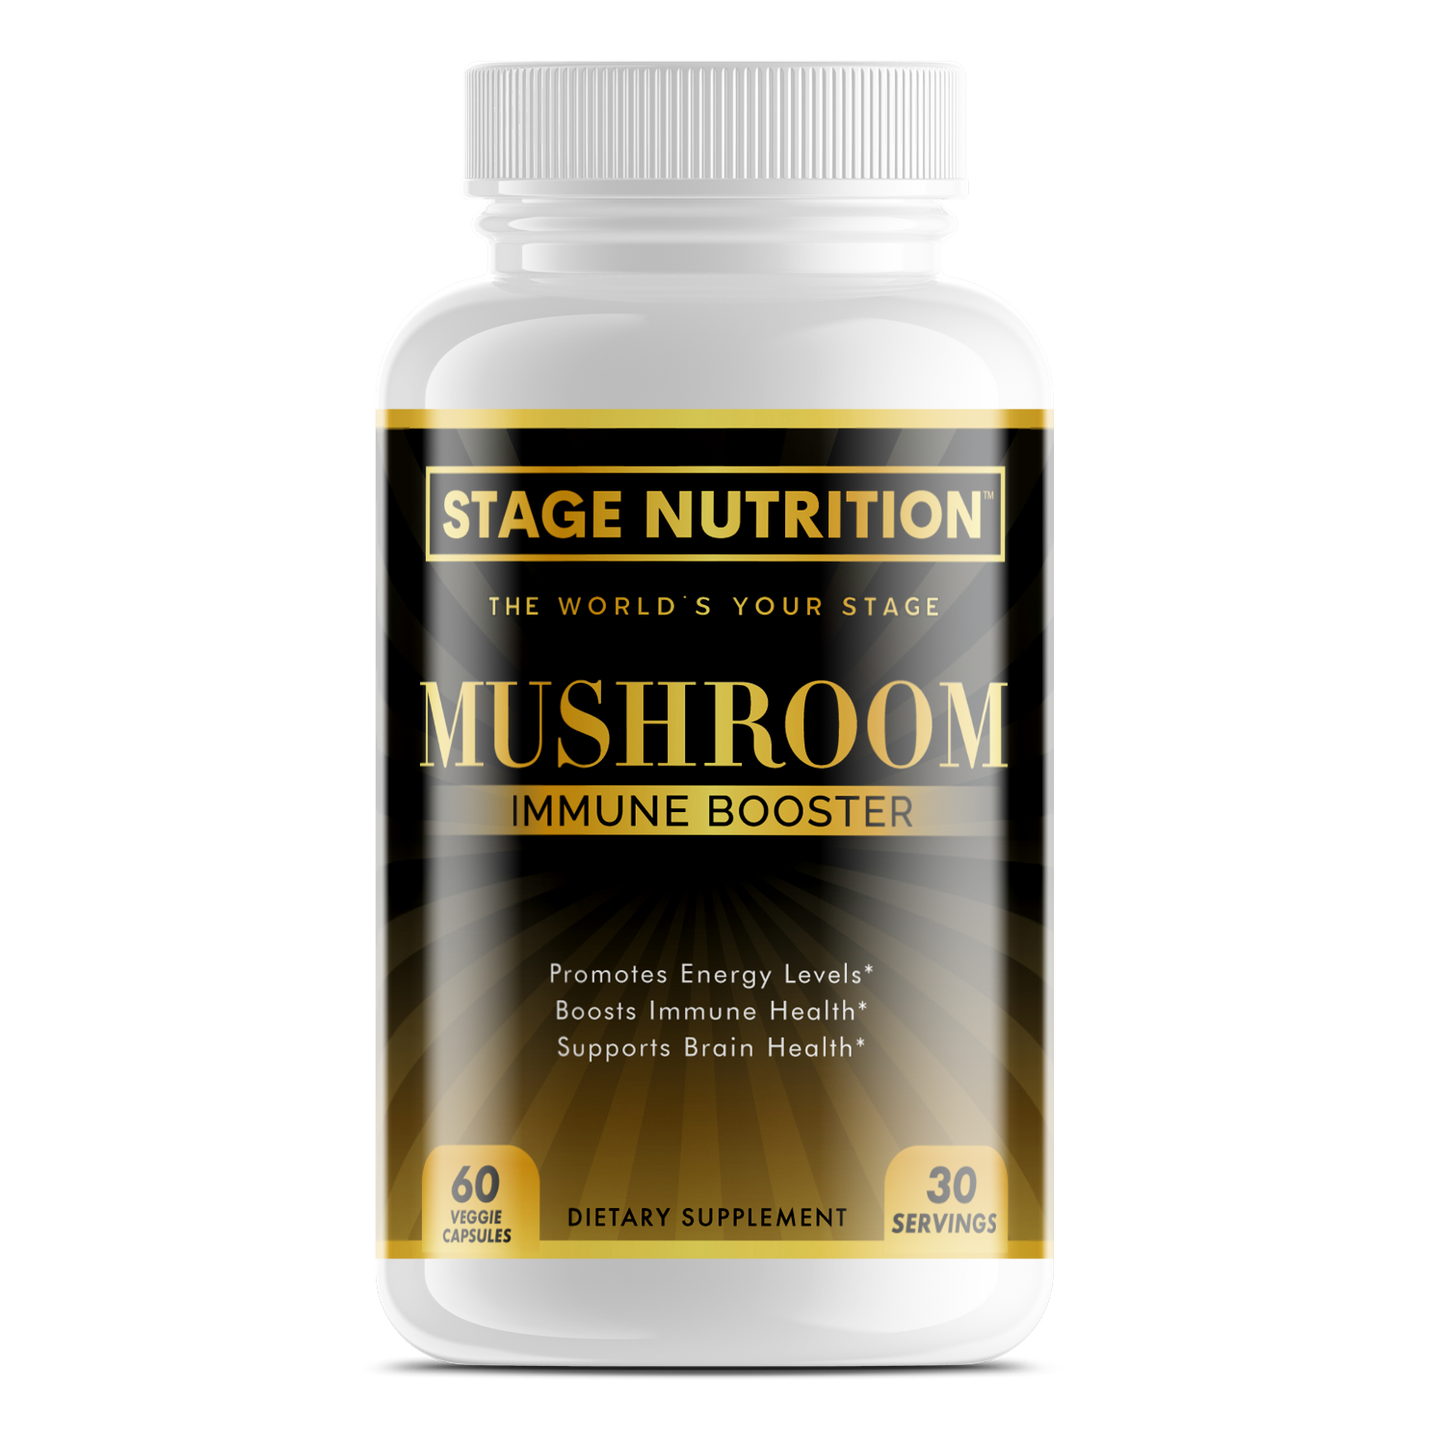 Mushroom Immune Booster